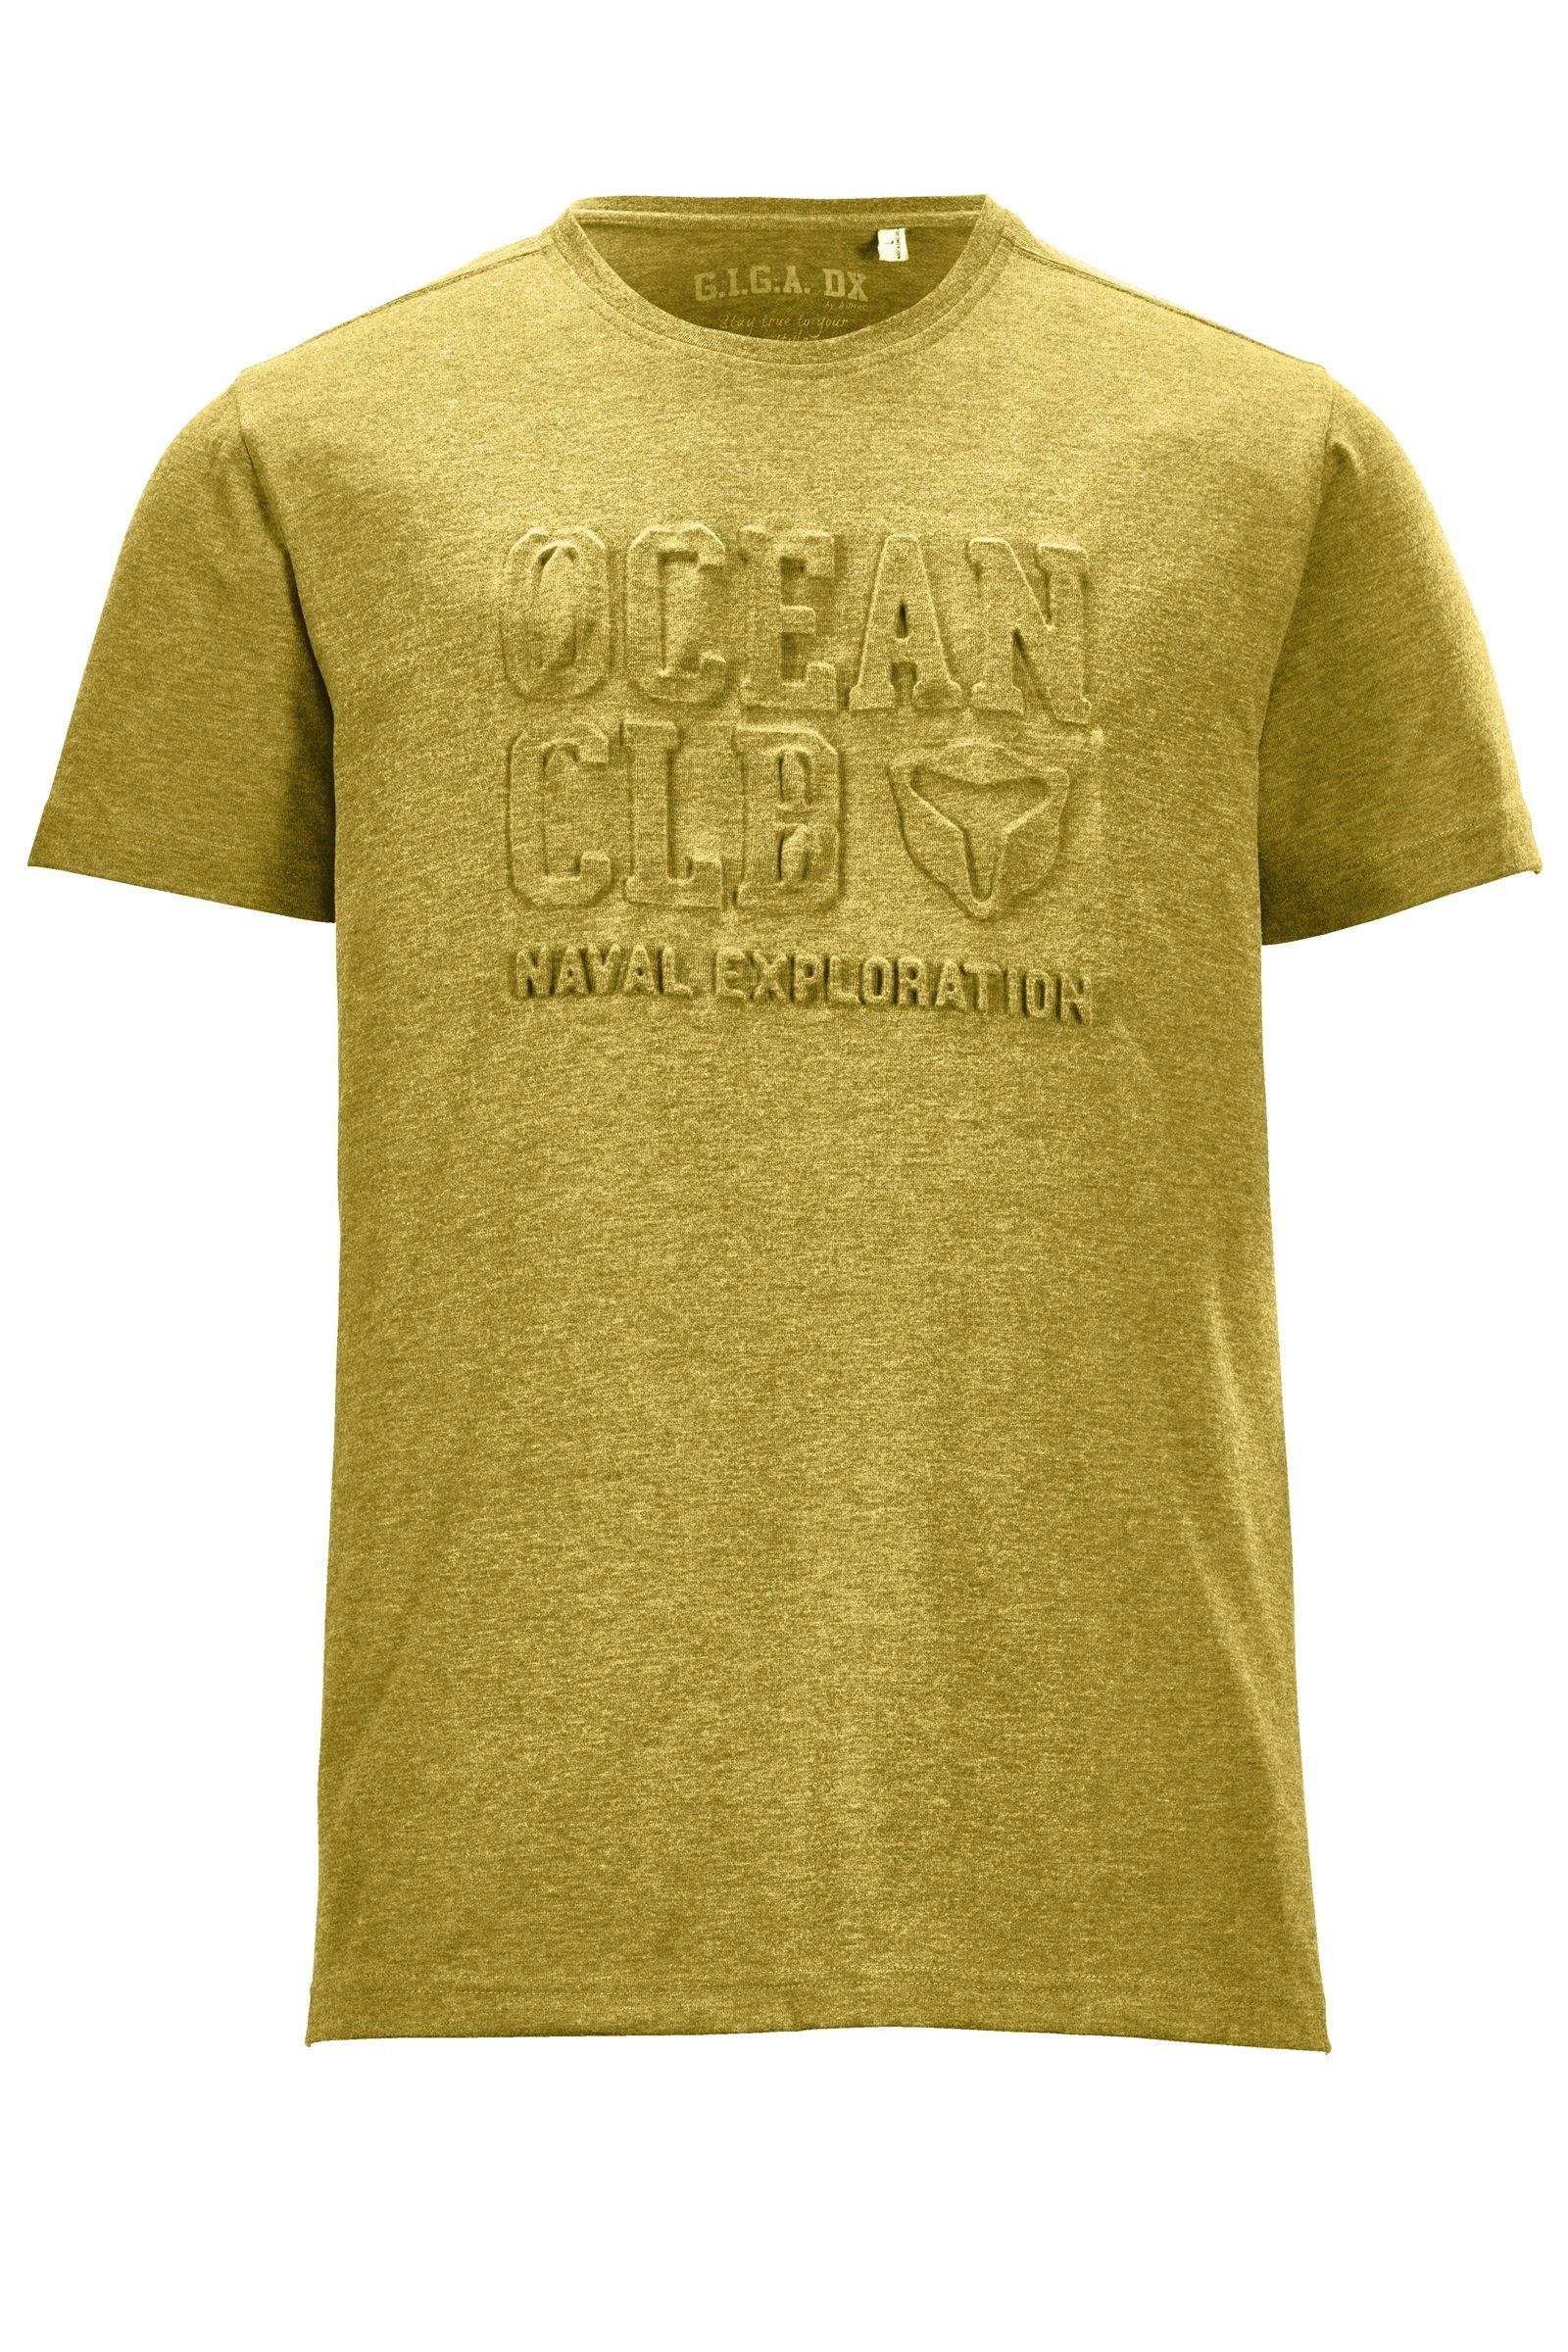 G.I.G.A. DX by killtec T-Shirt G.I.G.A. DX Herren T-Shirt Ederra MN TSHRT C Adult gebranntes gelb